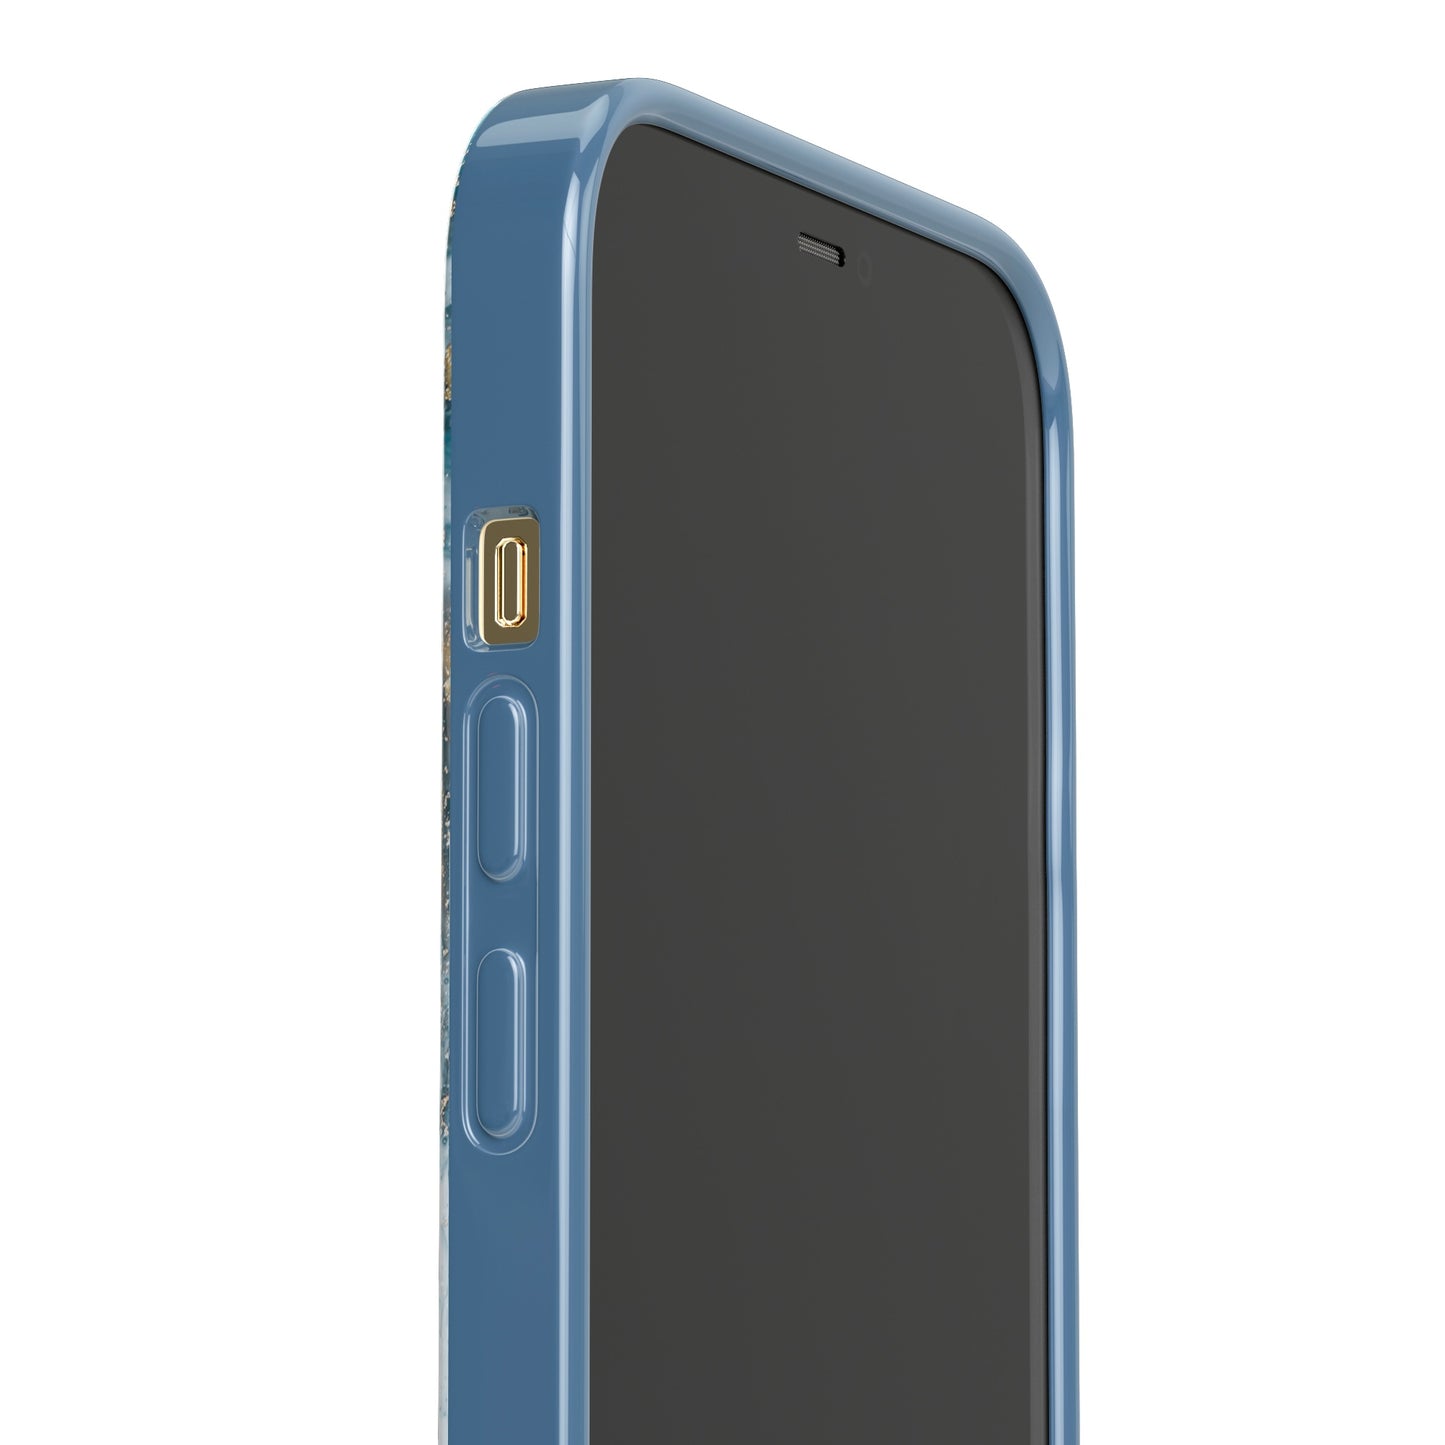 Sandy Ocean iPhone 12 Case